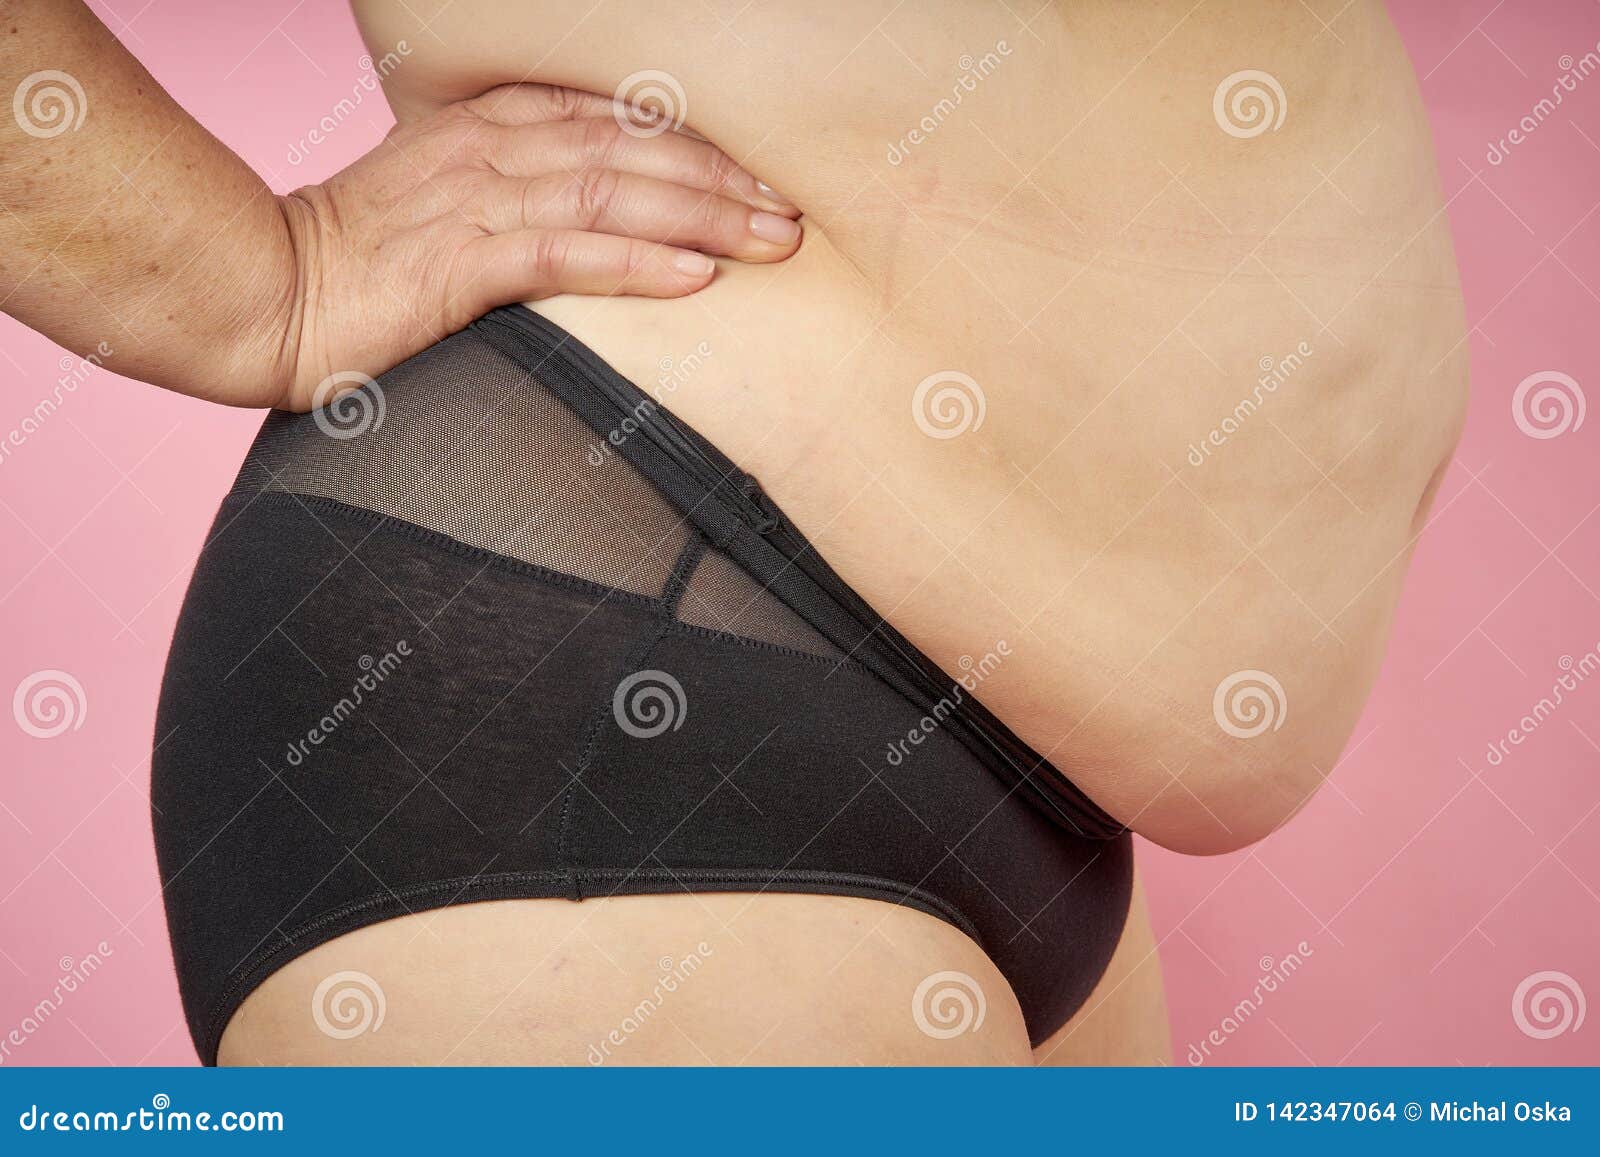 Fat Woman Underwear Image & Photo (Free Trial)